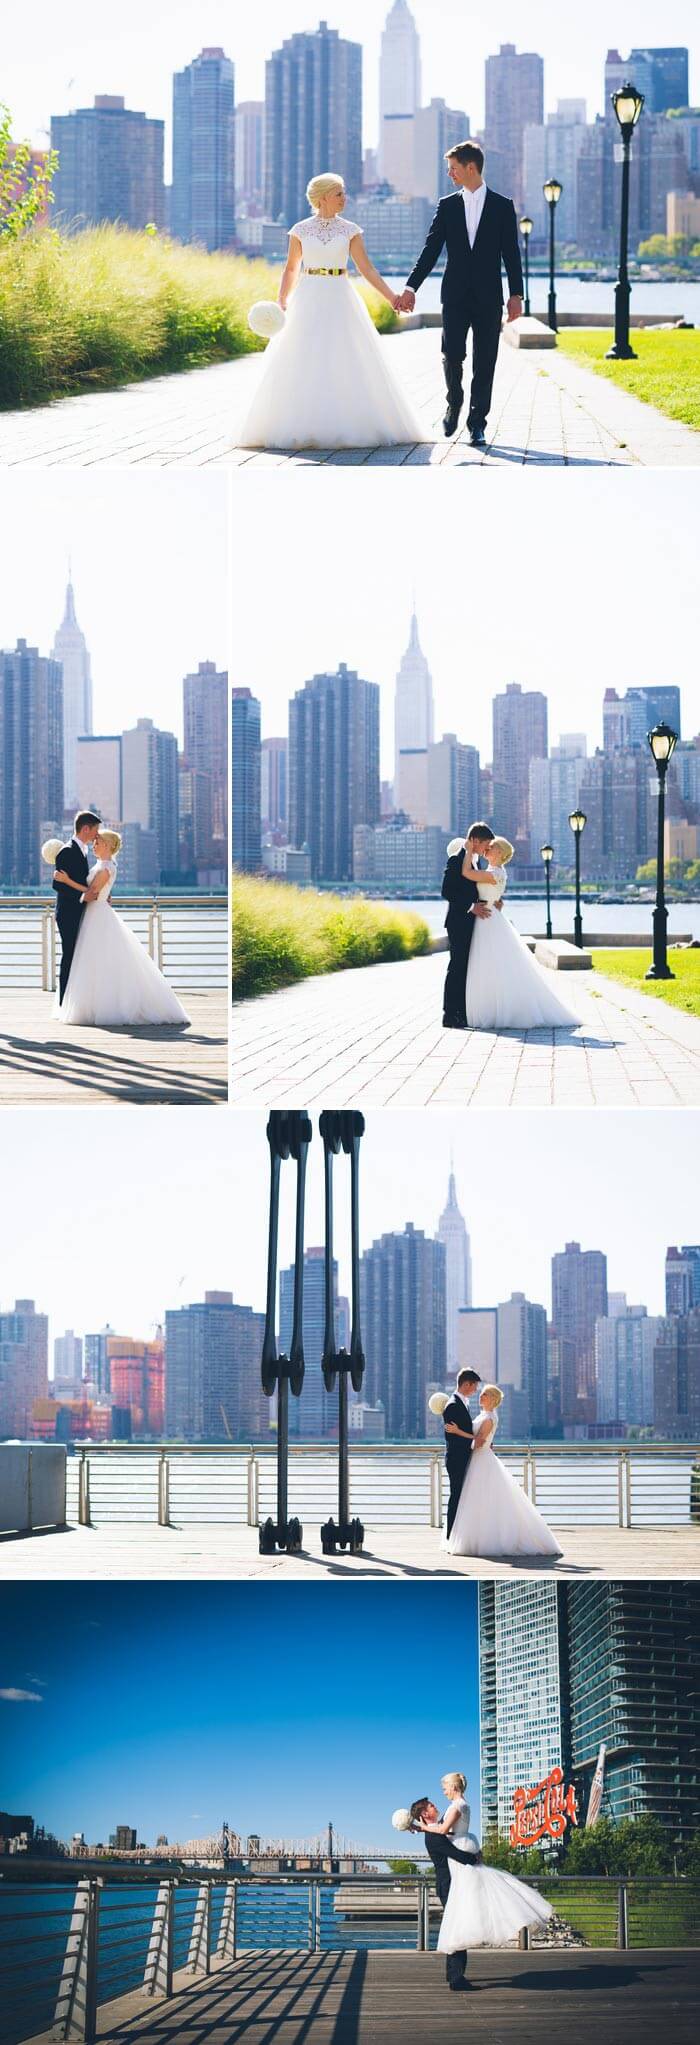 Heiraten In New York Fotostory Mit Tollen Inspirationen